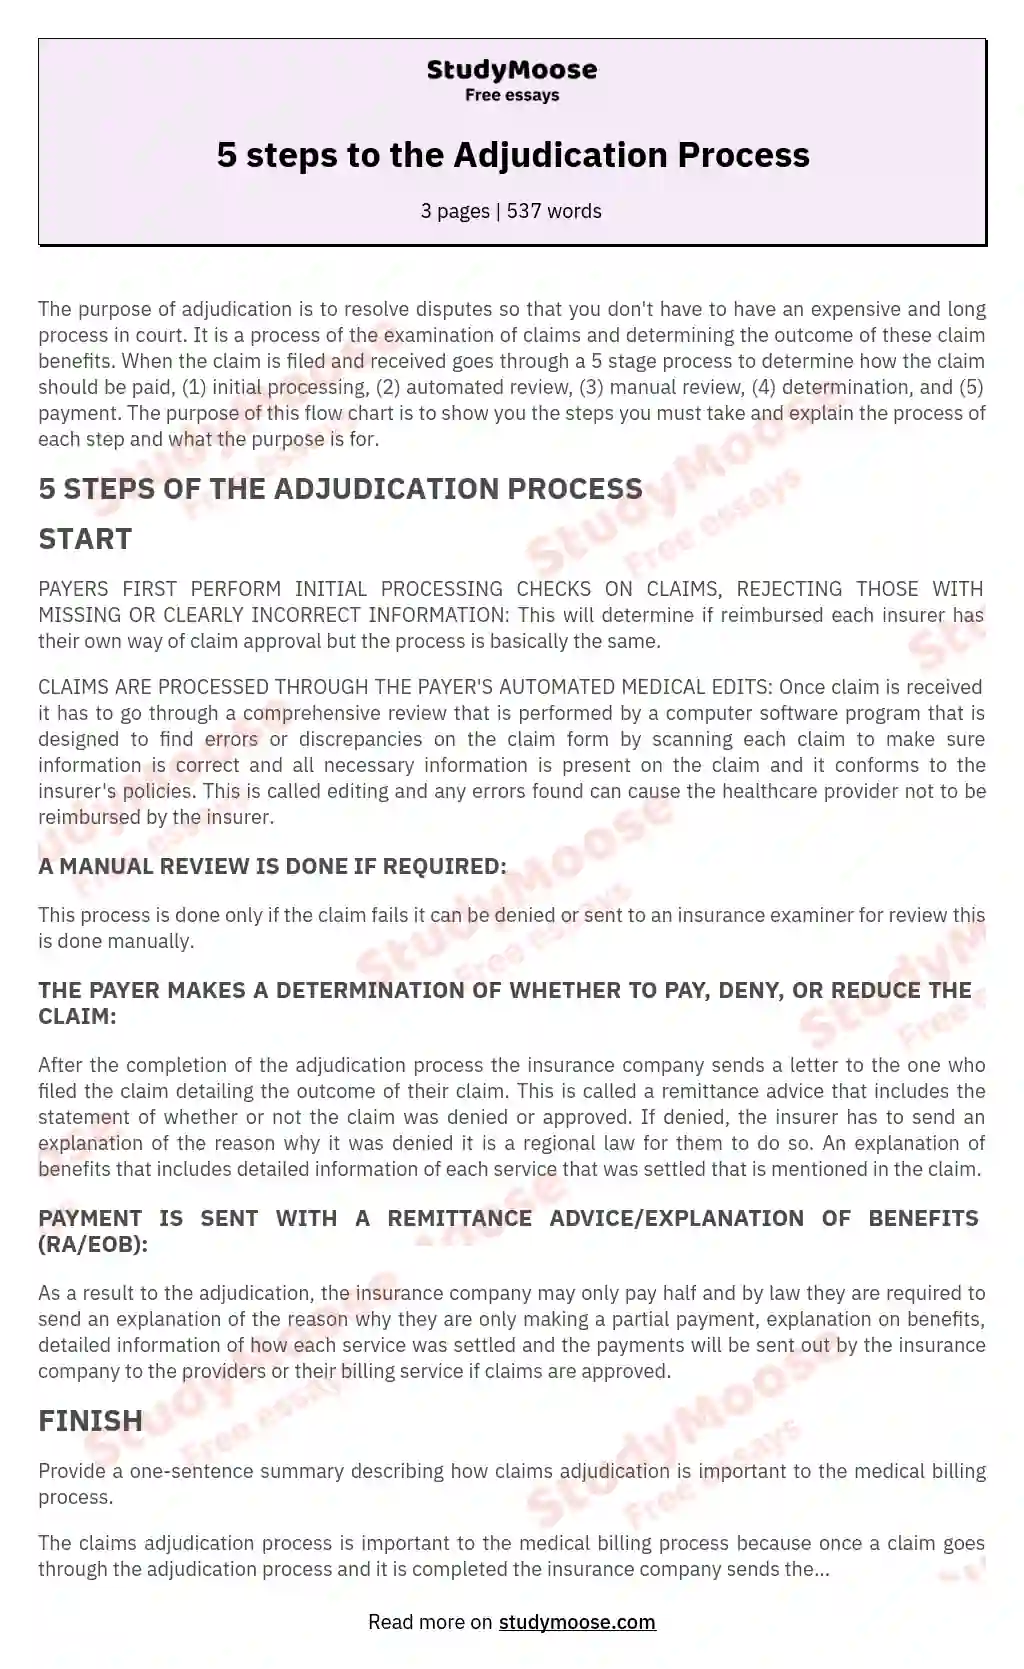 5 steps to the Adjudication Process essay